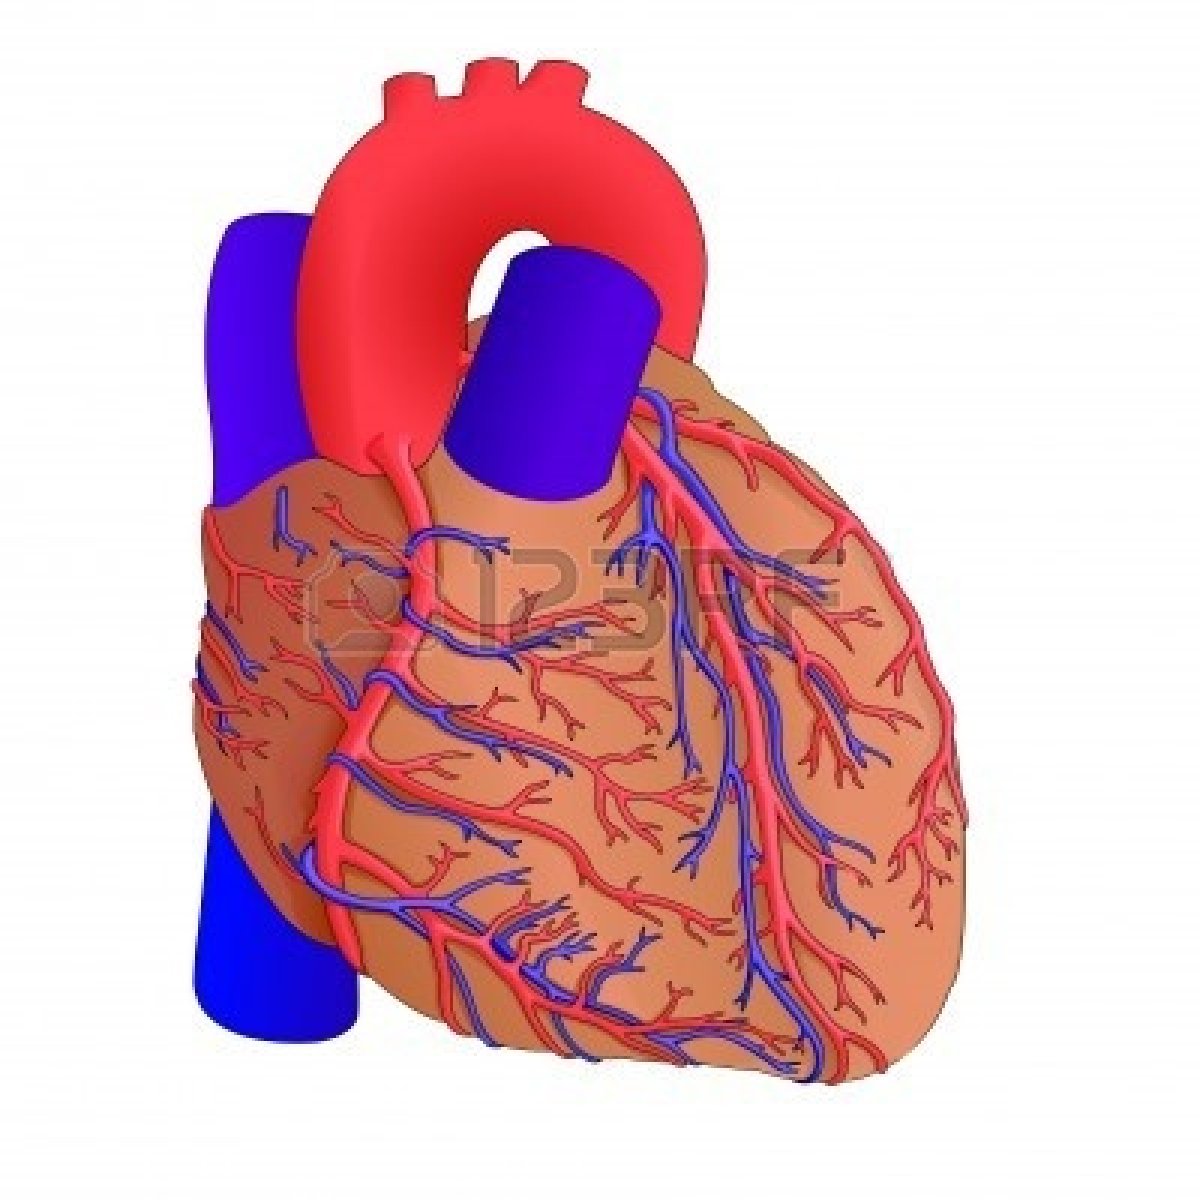 Anatomical Heart Clip Art